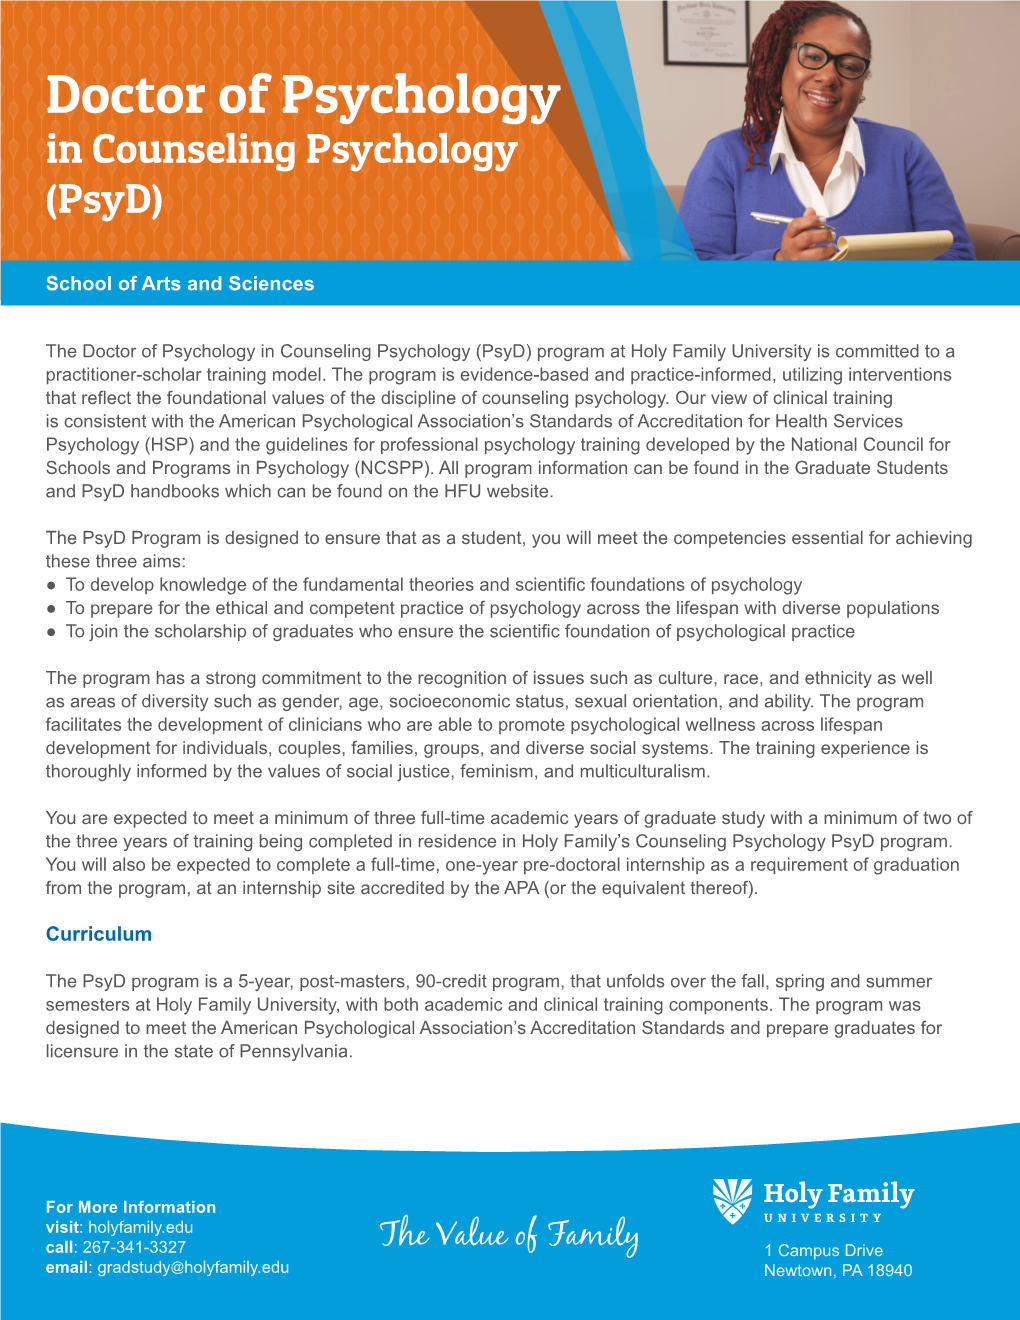 Doctor of Psychology in Counseling Psychology (Psyd)